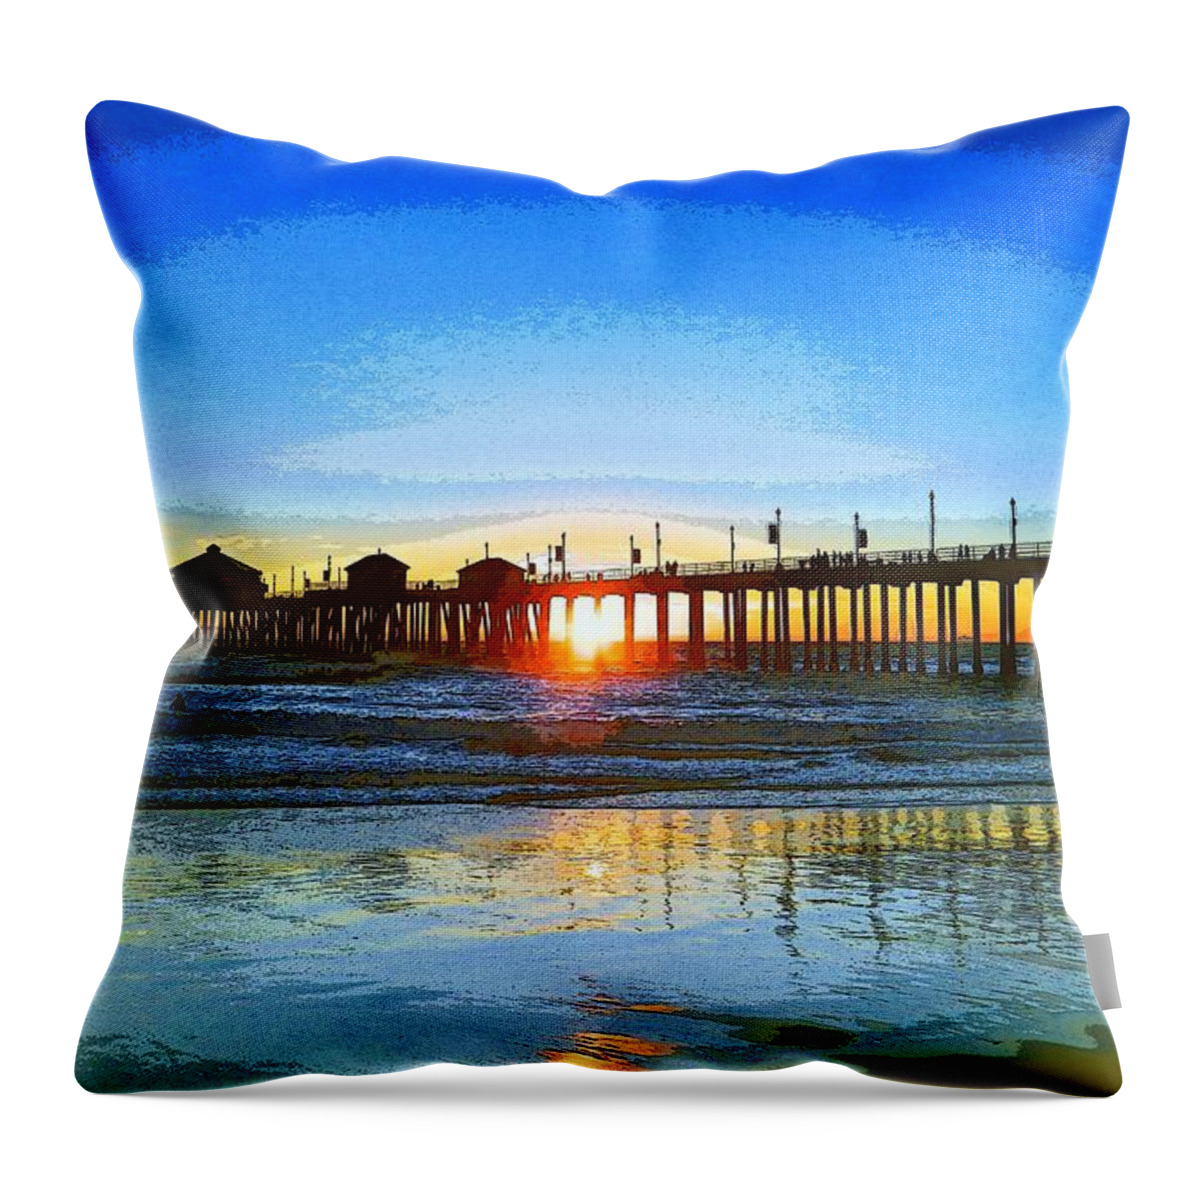 Huntington Beach Throw Pillow featuring the photograph The Huntington Beach pier by Everette McMahan jr